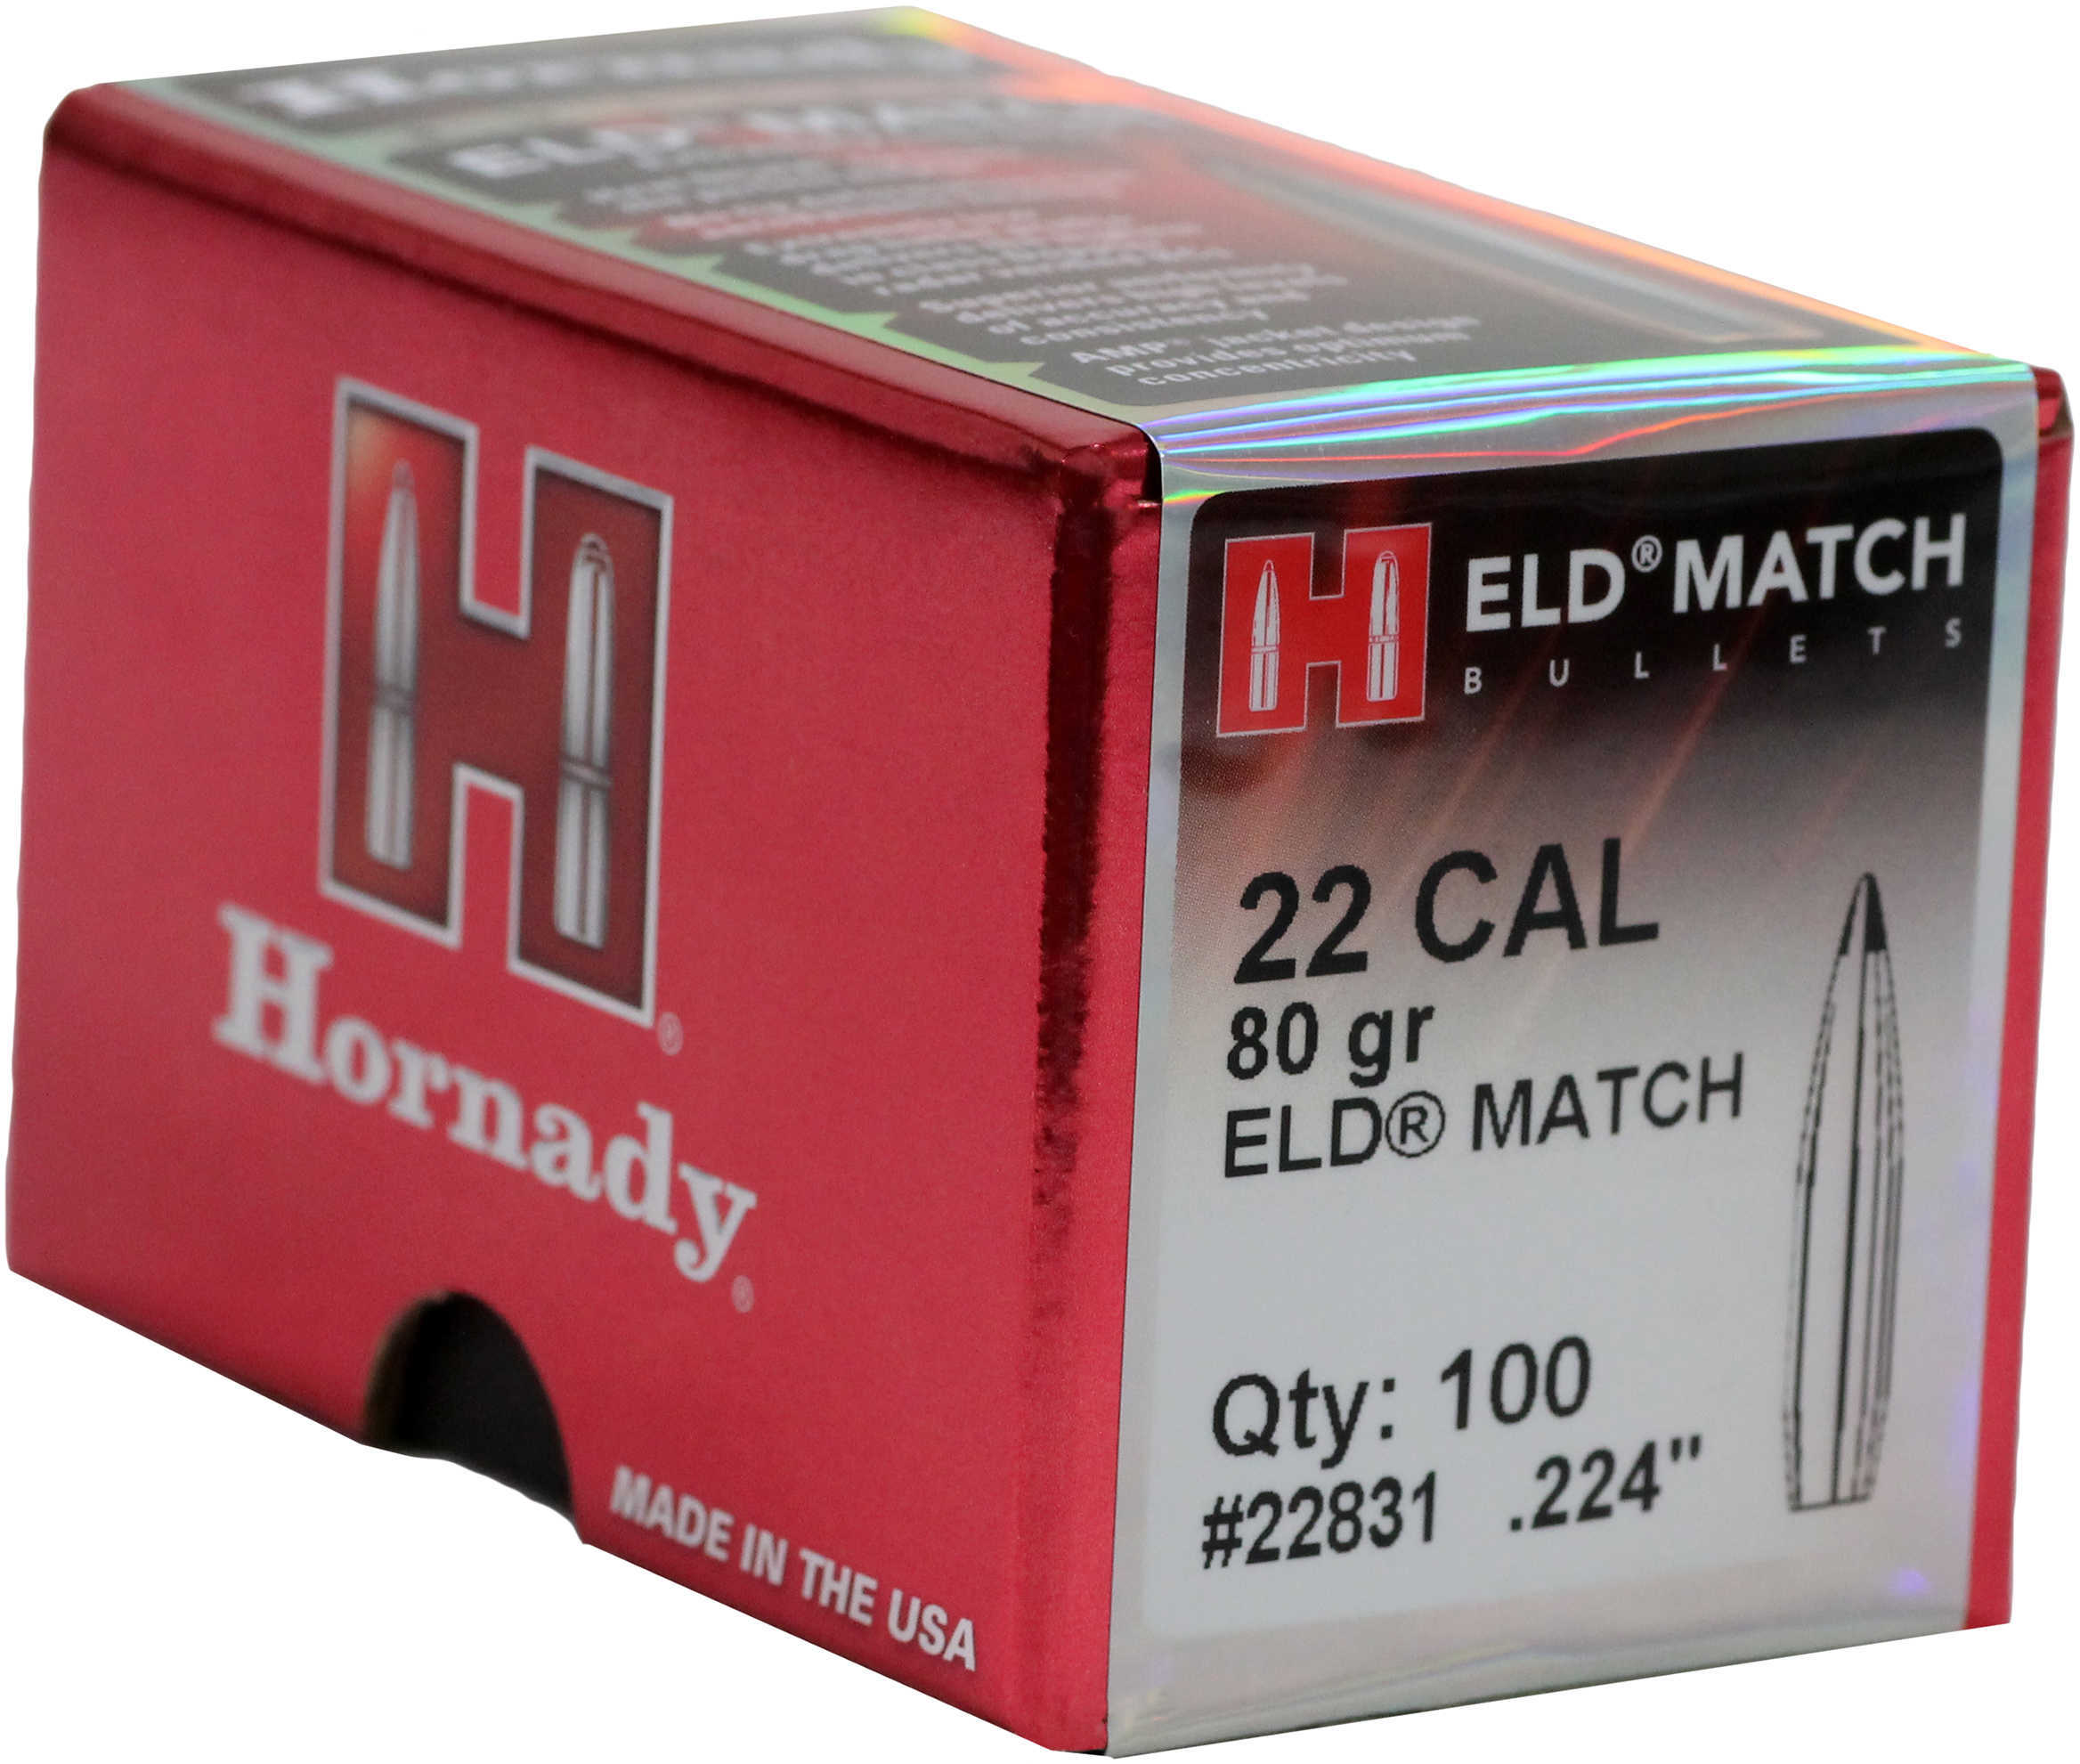 Hornady ELD Match Reloading Bullets 22 Caliber 80 Grain Boat Tail, 100 Per Box Md: 22831